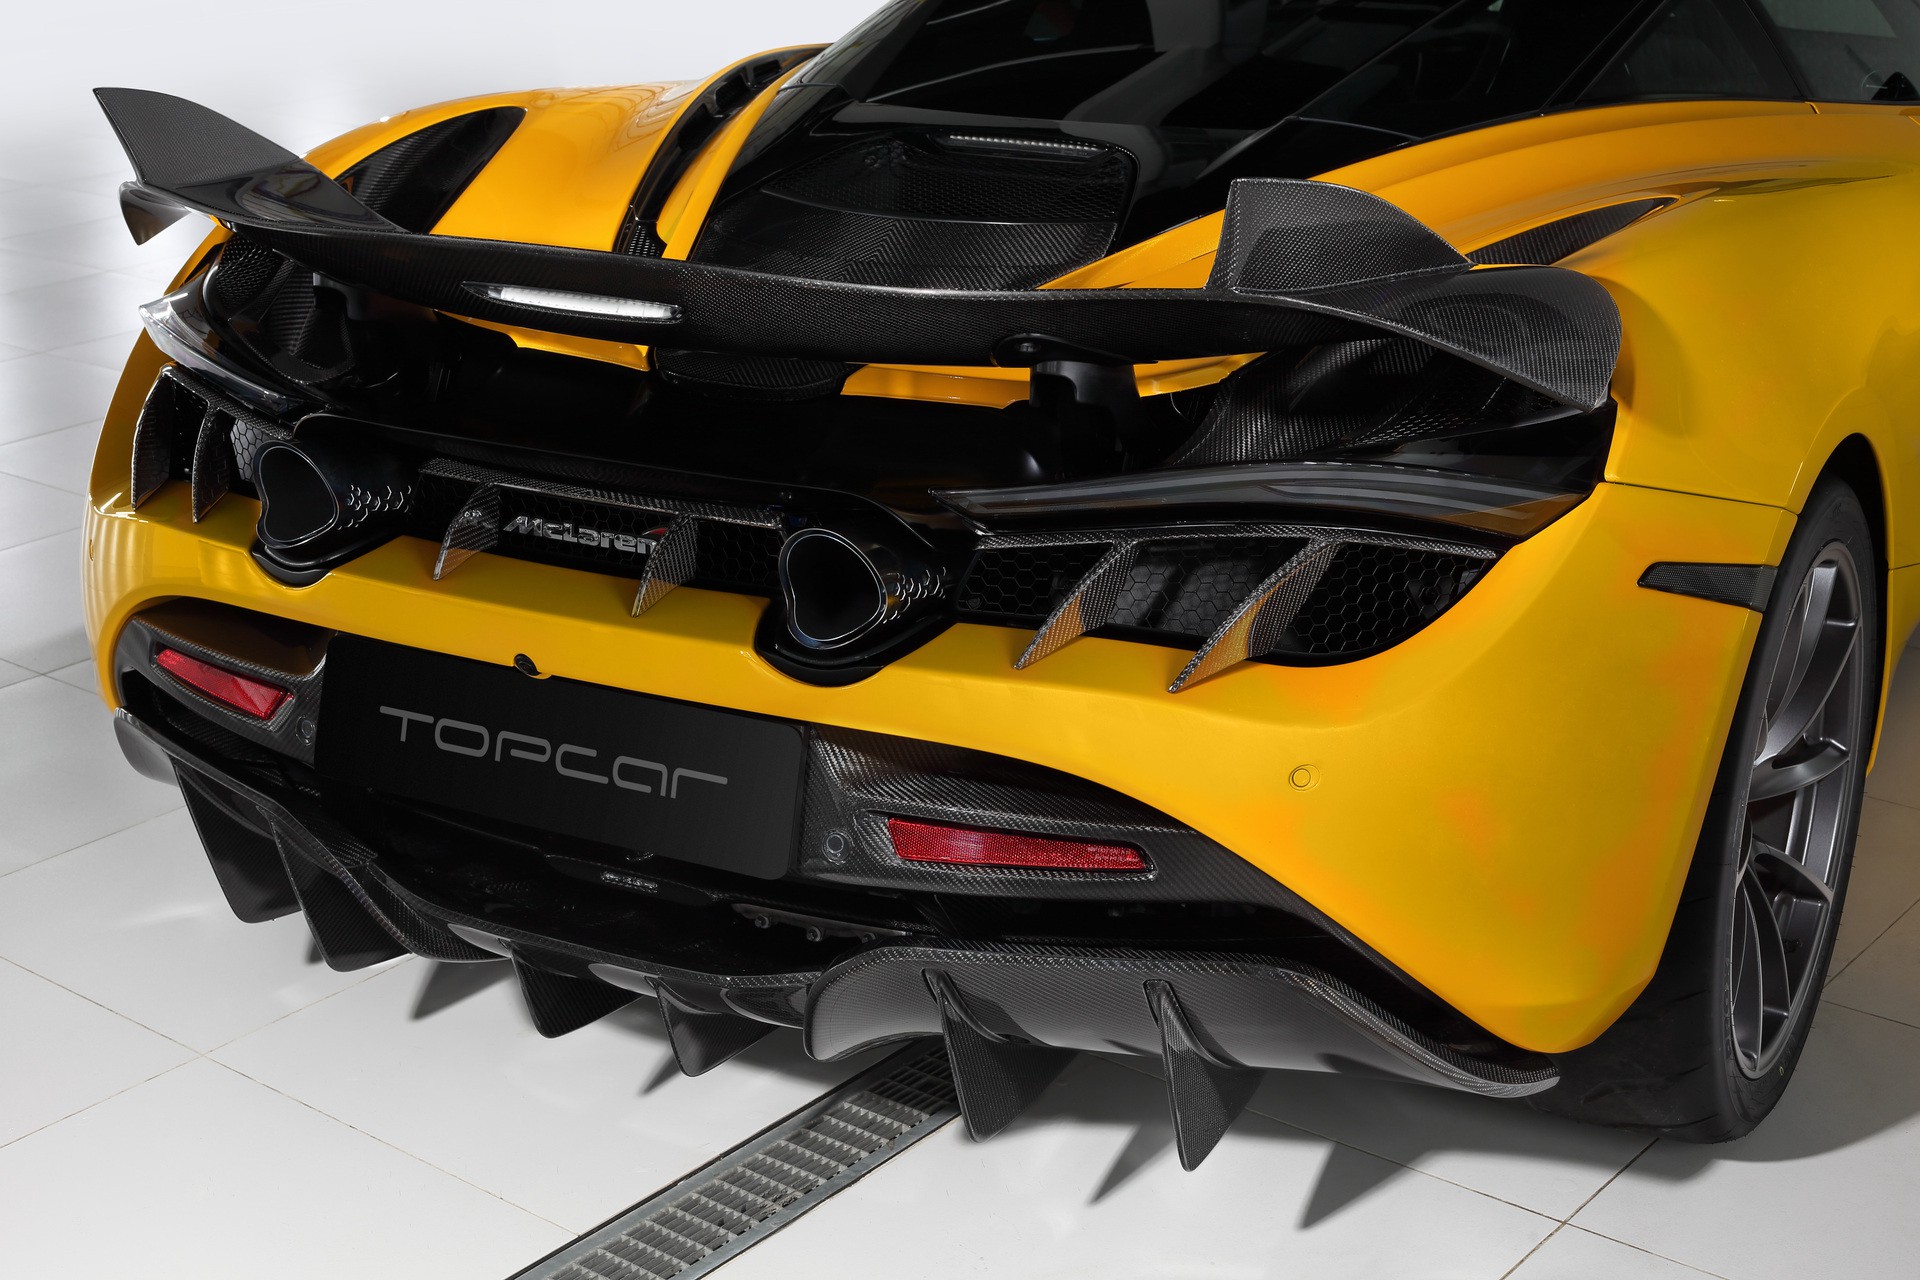 Topcar Design body kit for McLaren 720s